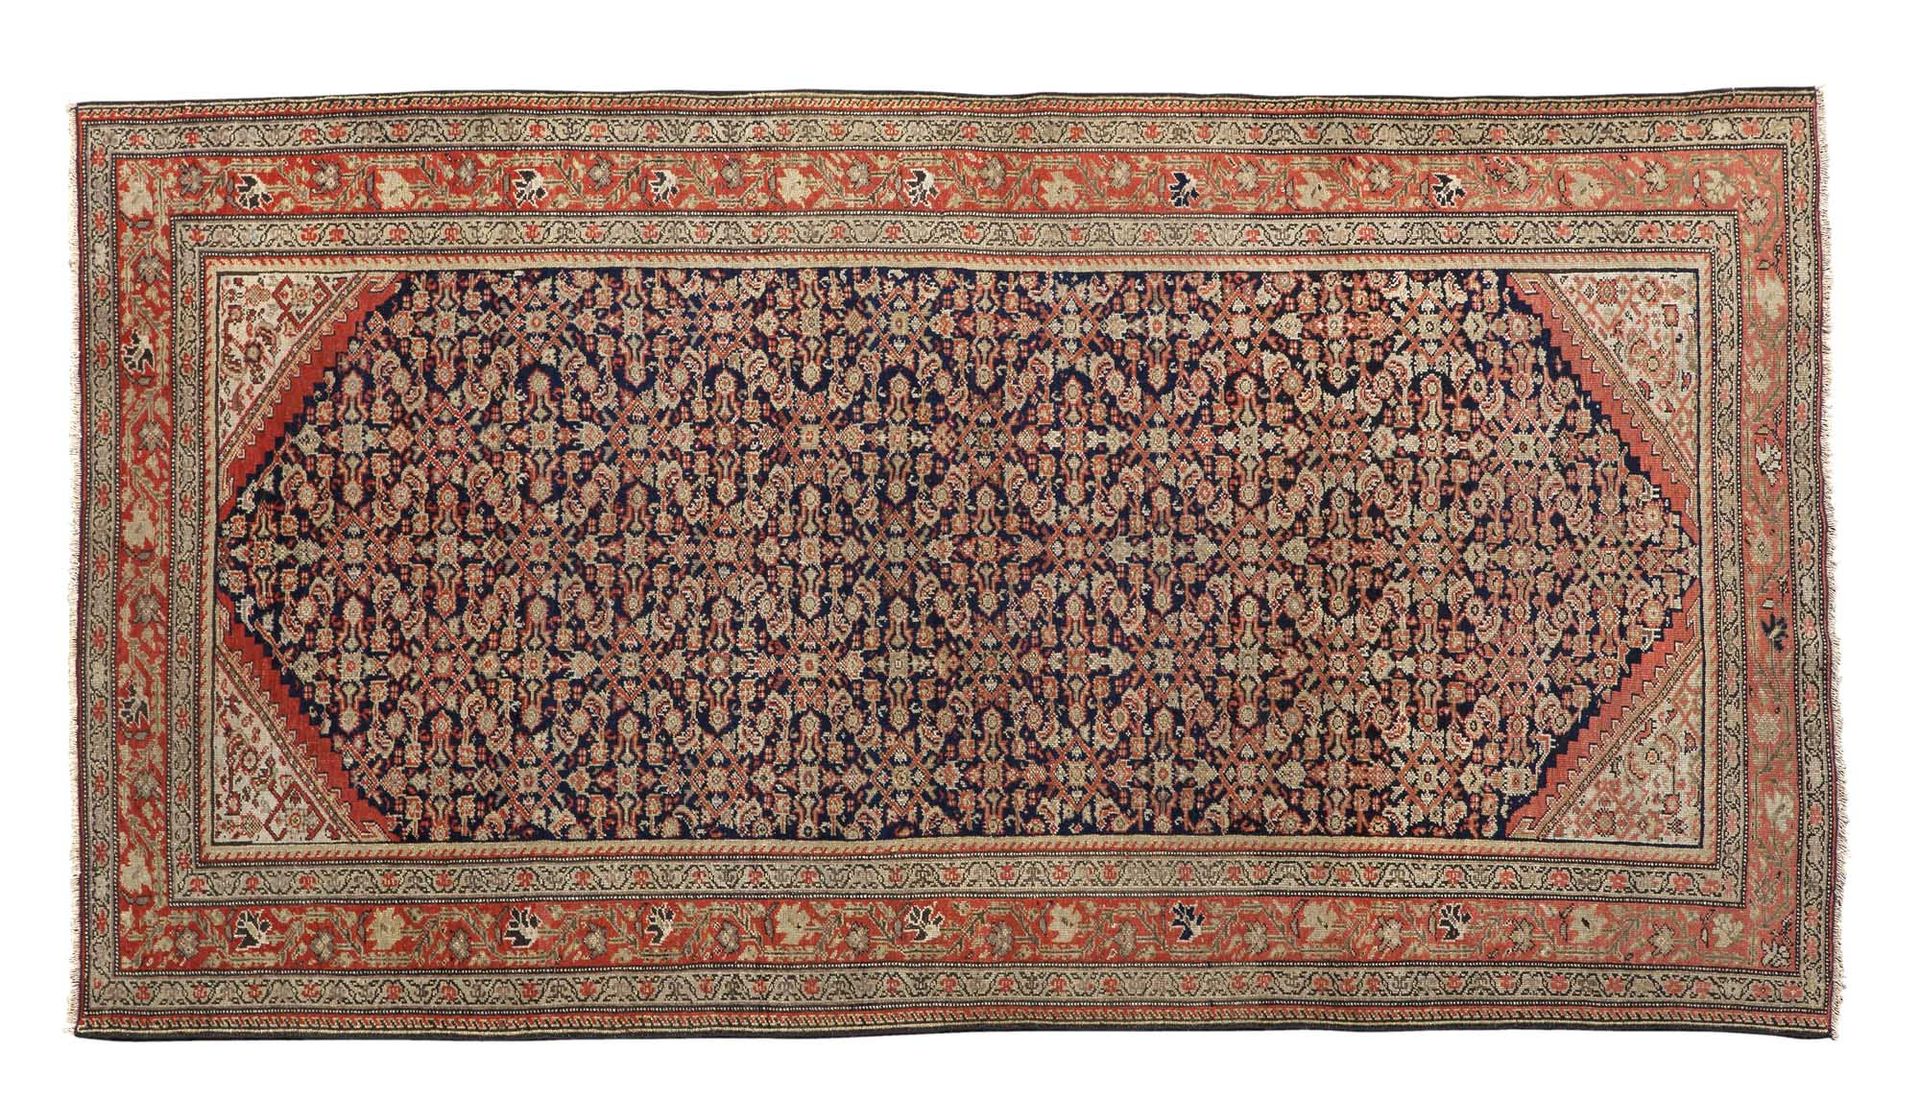 Null MELAYER carpet, (Persia), late 19th century

Dimensions : 191 x 120cm

Tech&hellip;